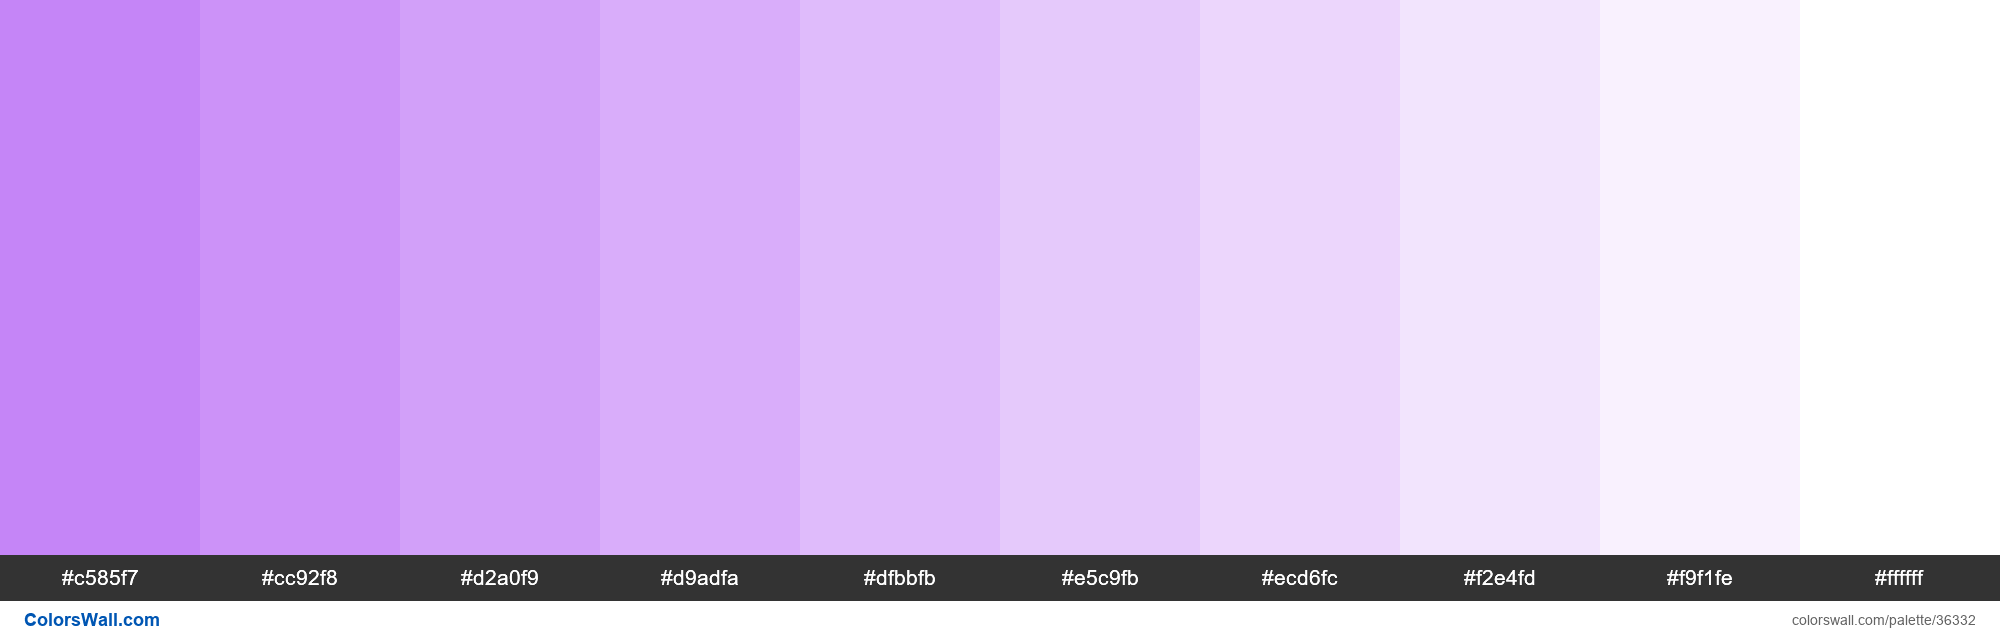 melodrama Titicacasøen Stoop Tints XKCD Color light purple #bf77f6 hex colors palette | ColorsWall